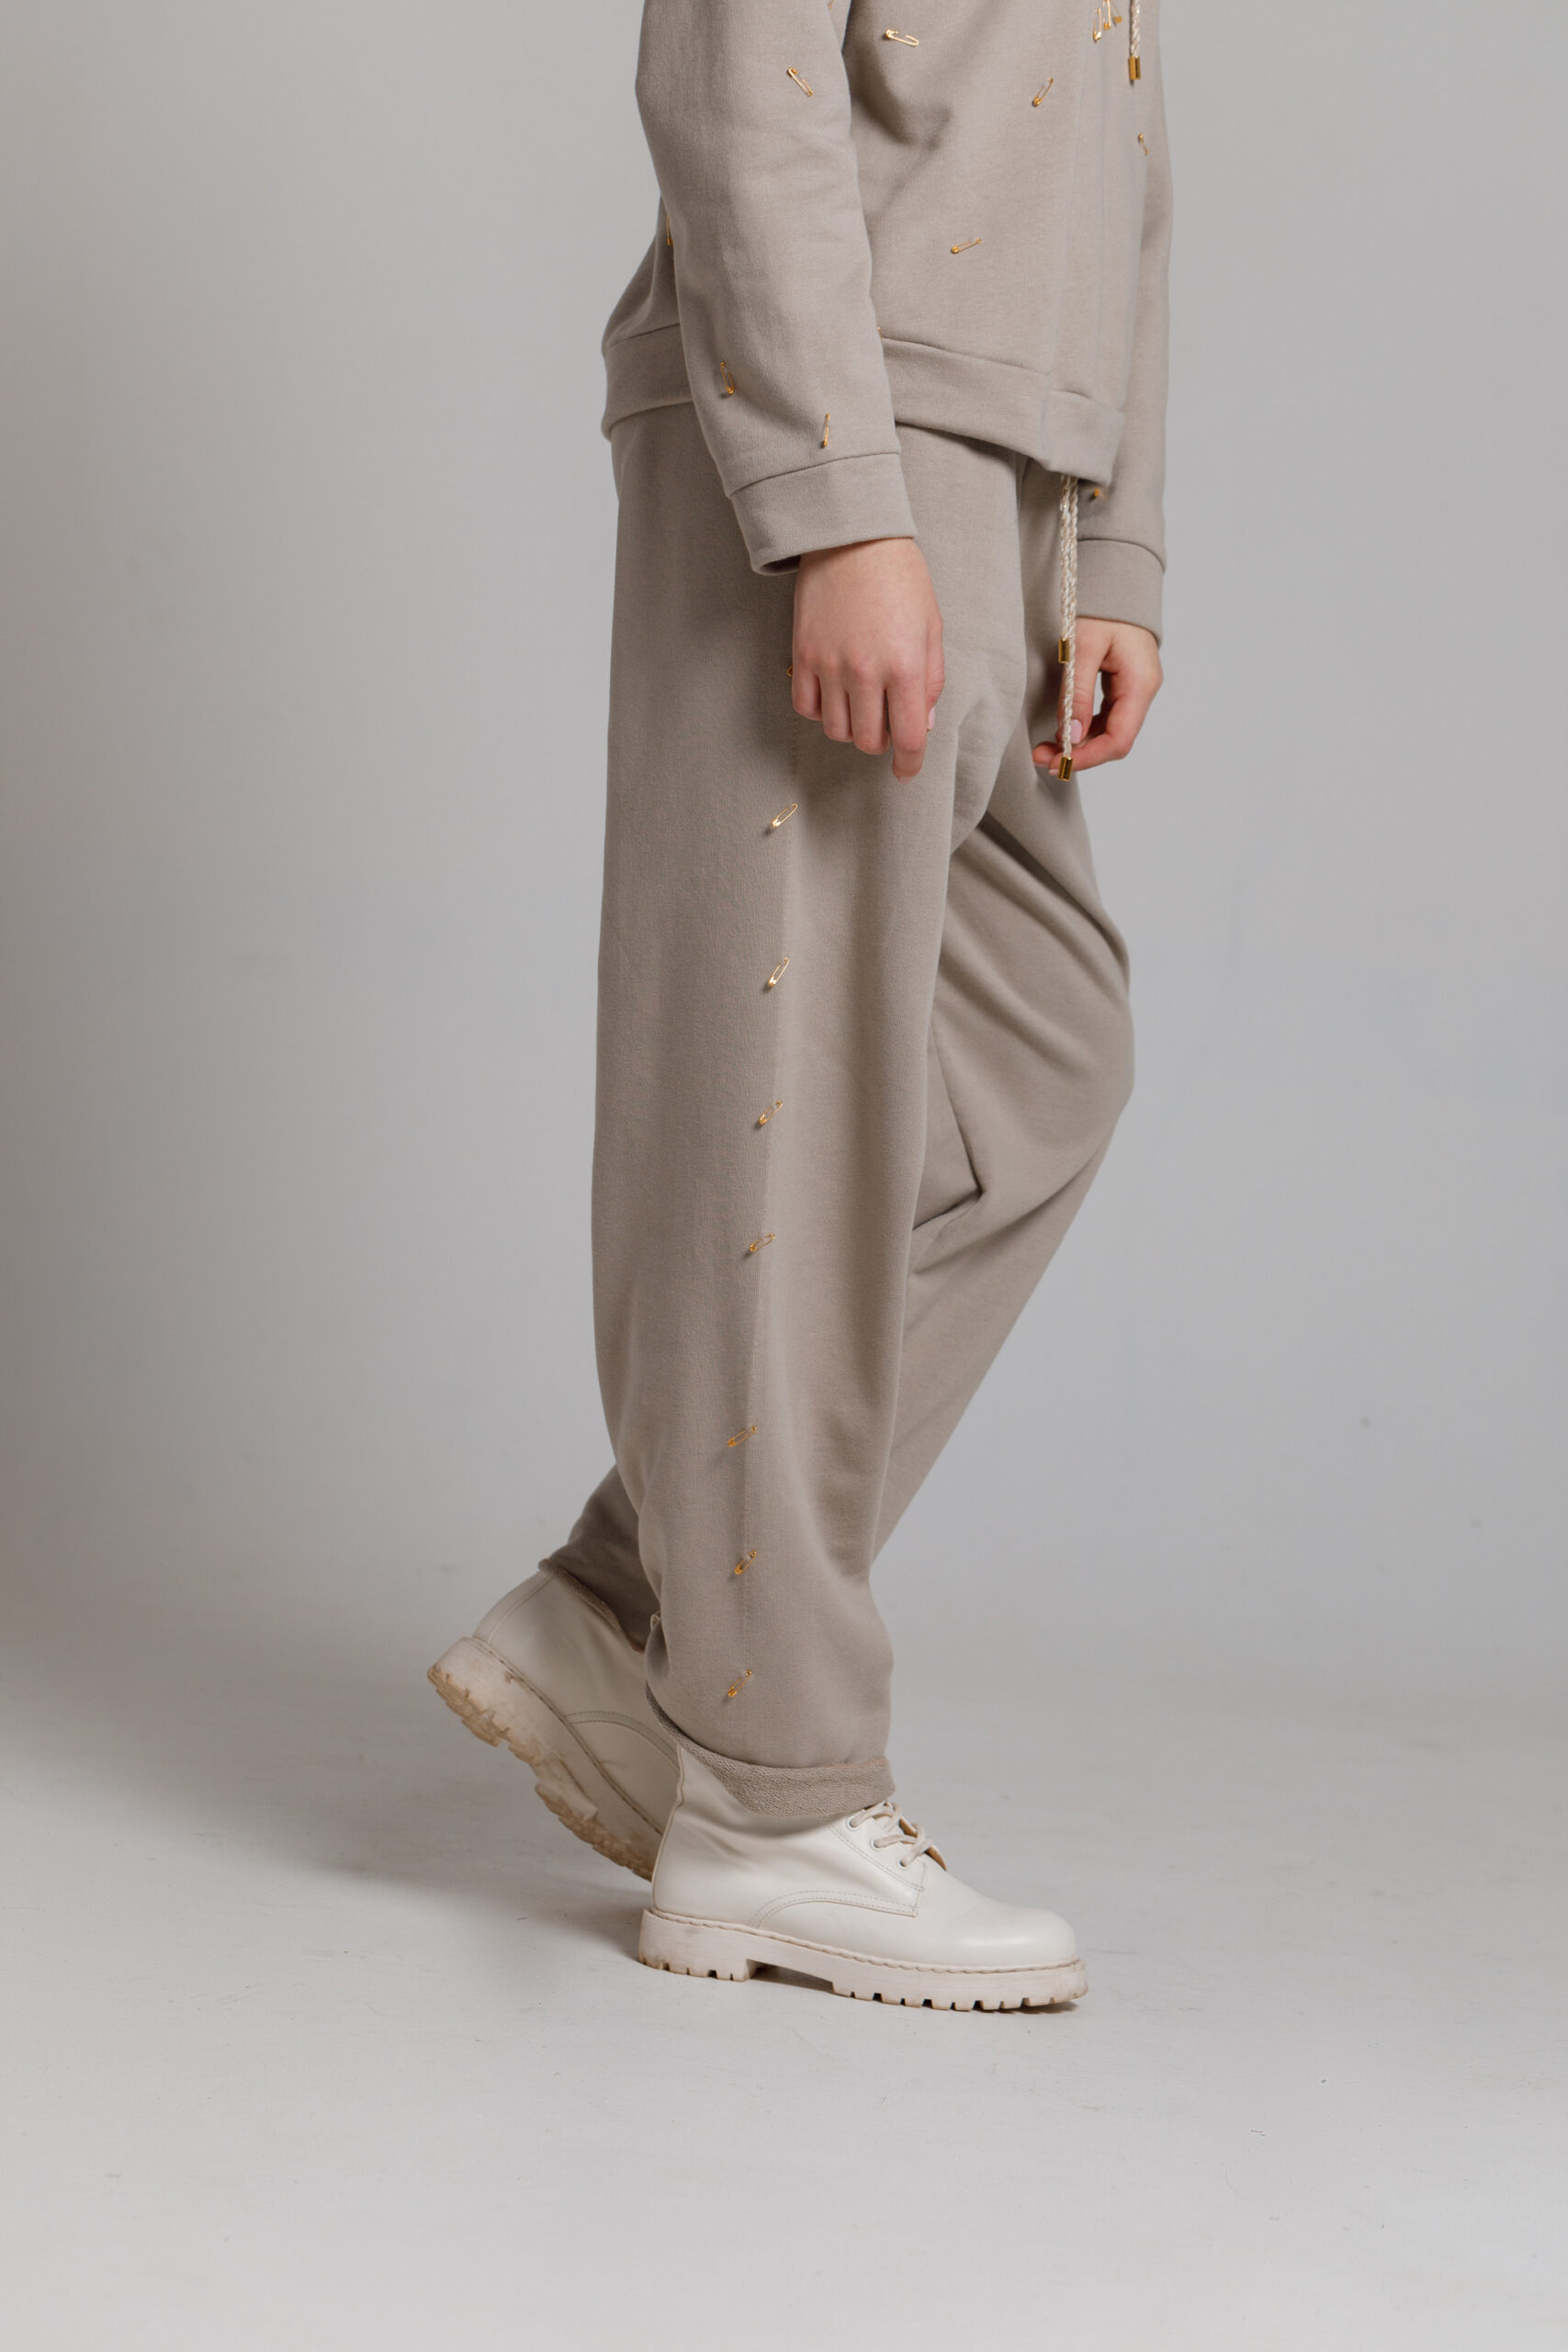 MARS beige casual pants. Natural fabrics, original design, handmade embroidery